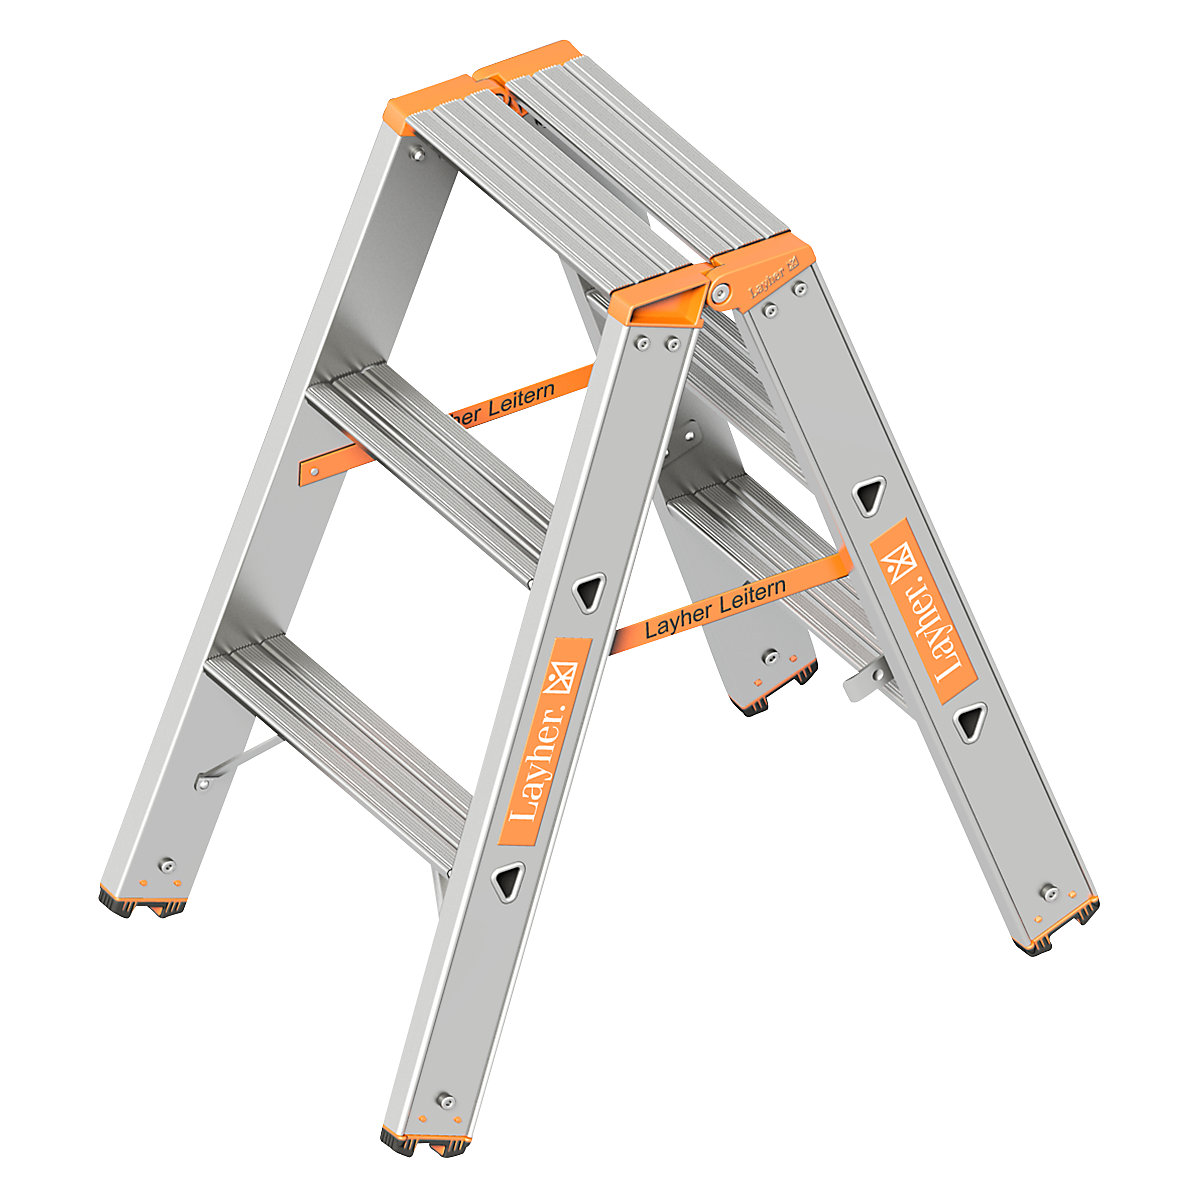 Step ladder – Layher